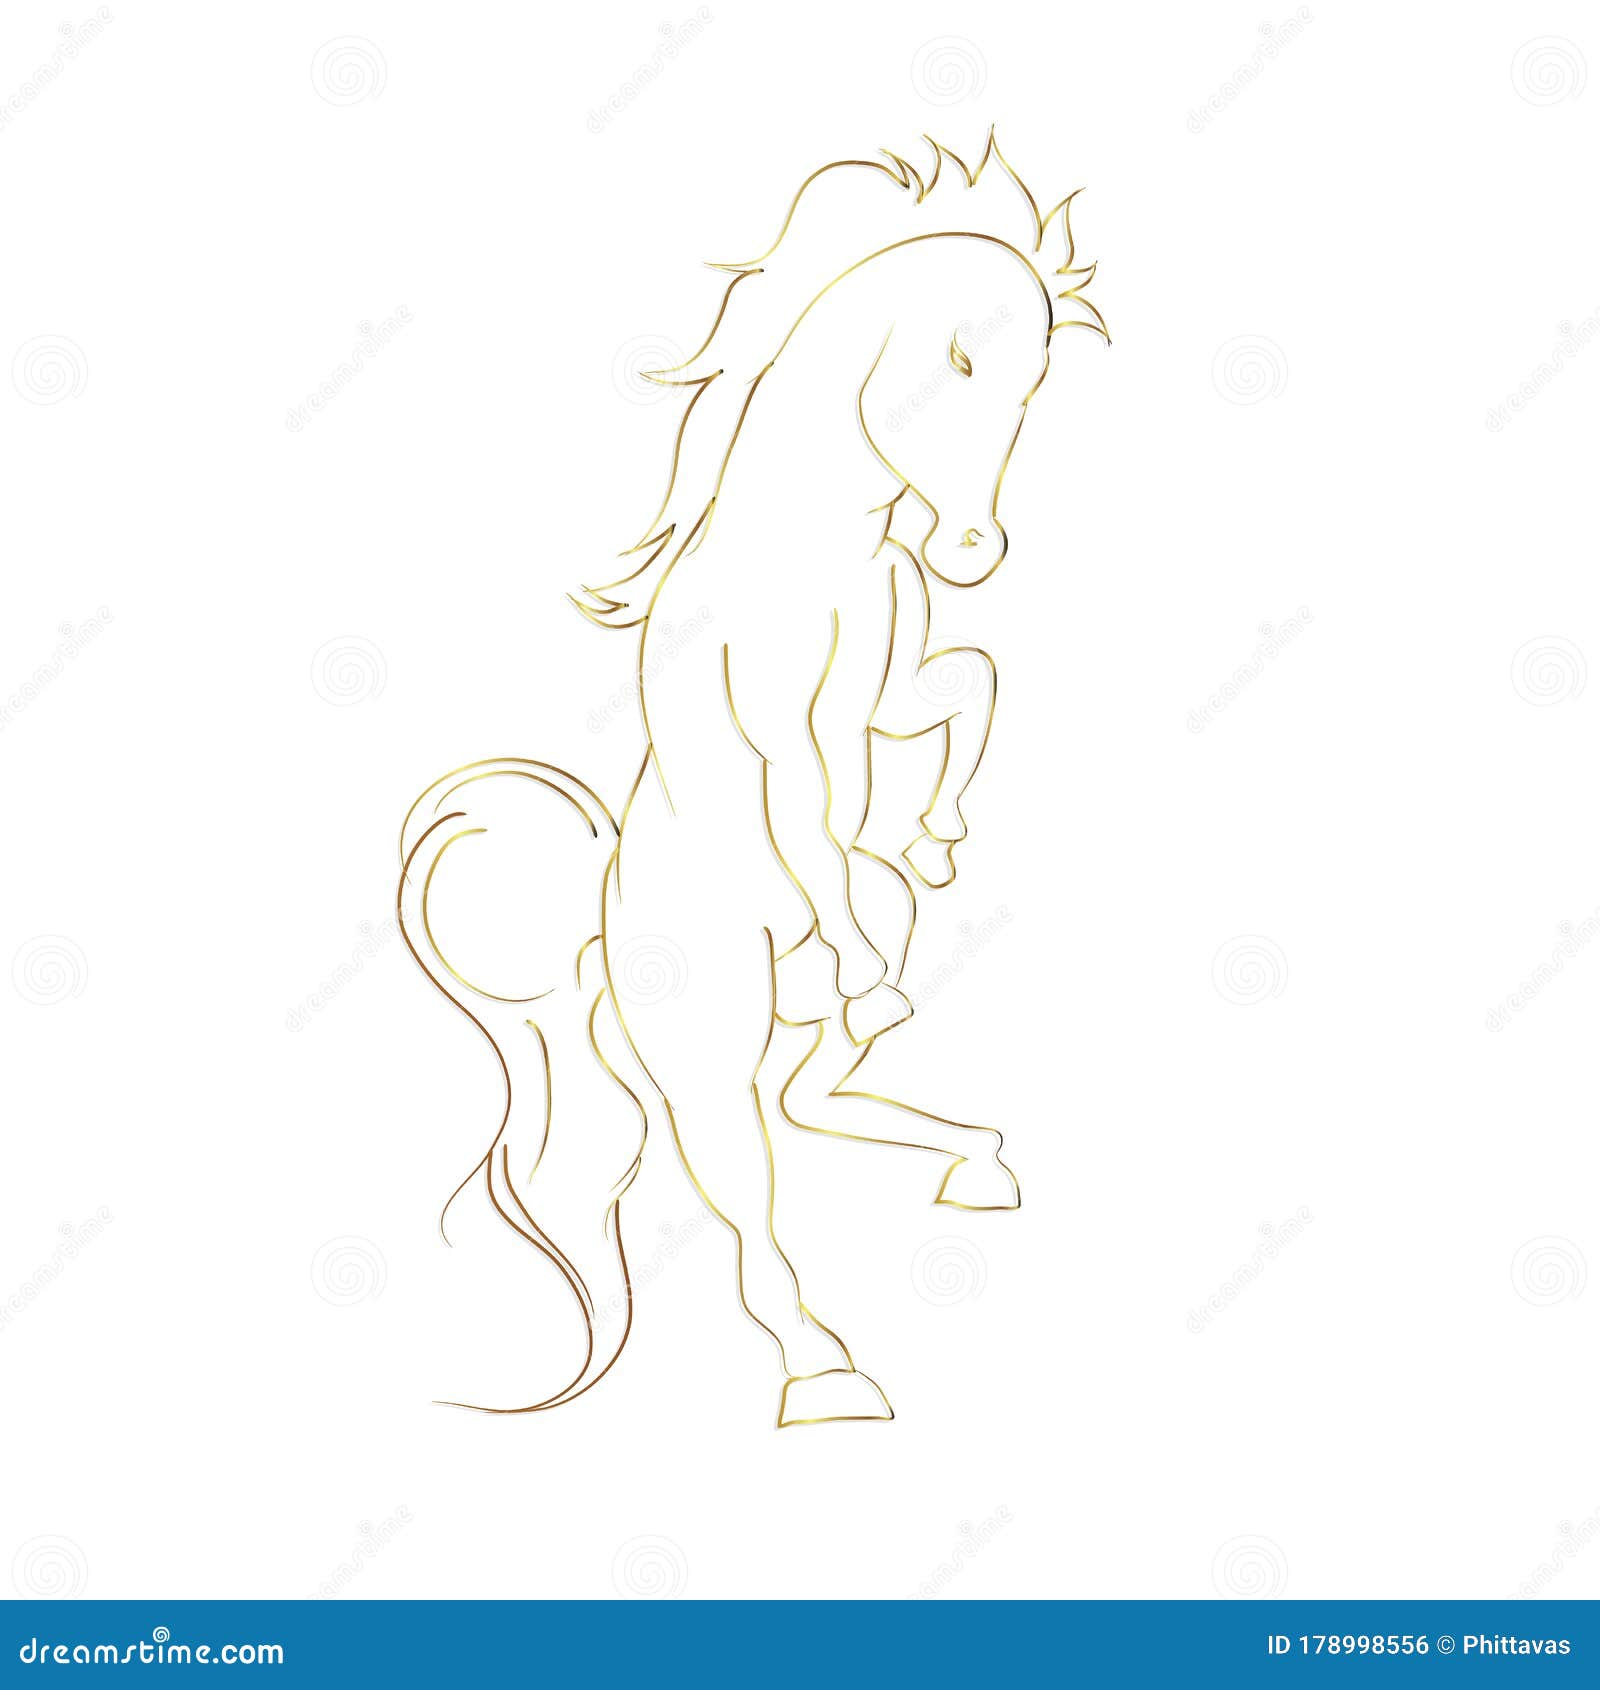 luxurious golden border horse skittish on white background